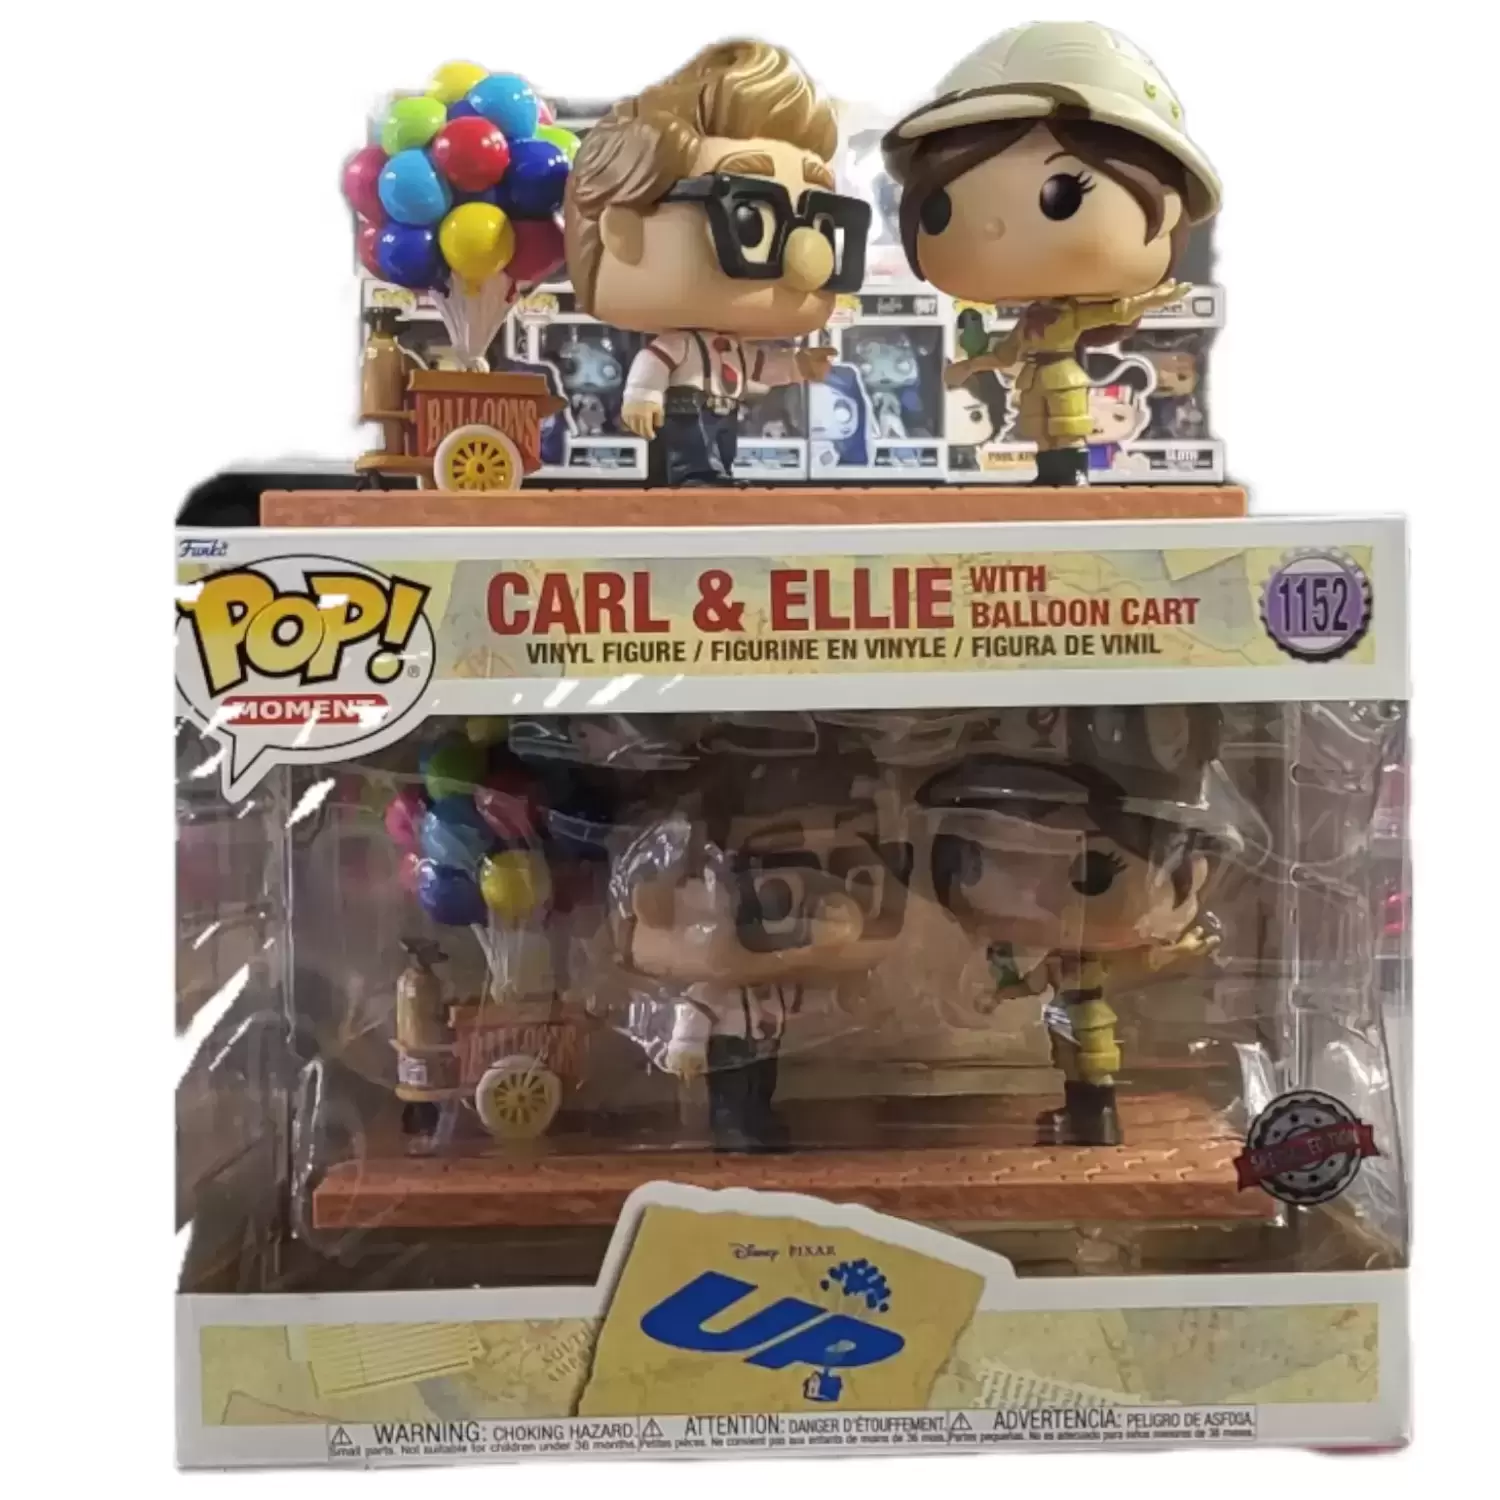 POP! Disney - UP - Carl & Ellie with Balloon Cart